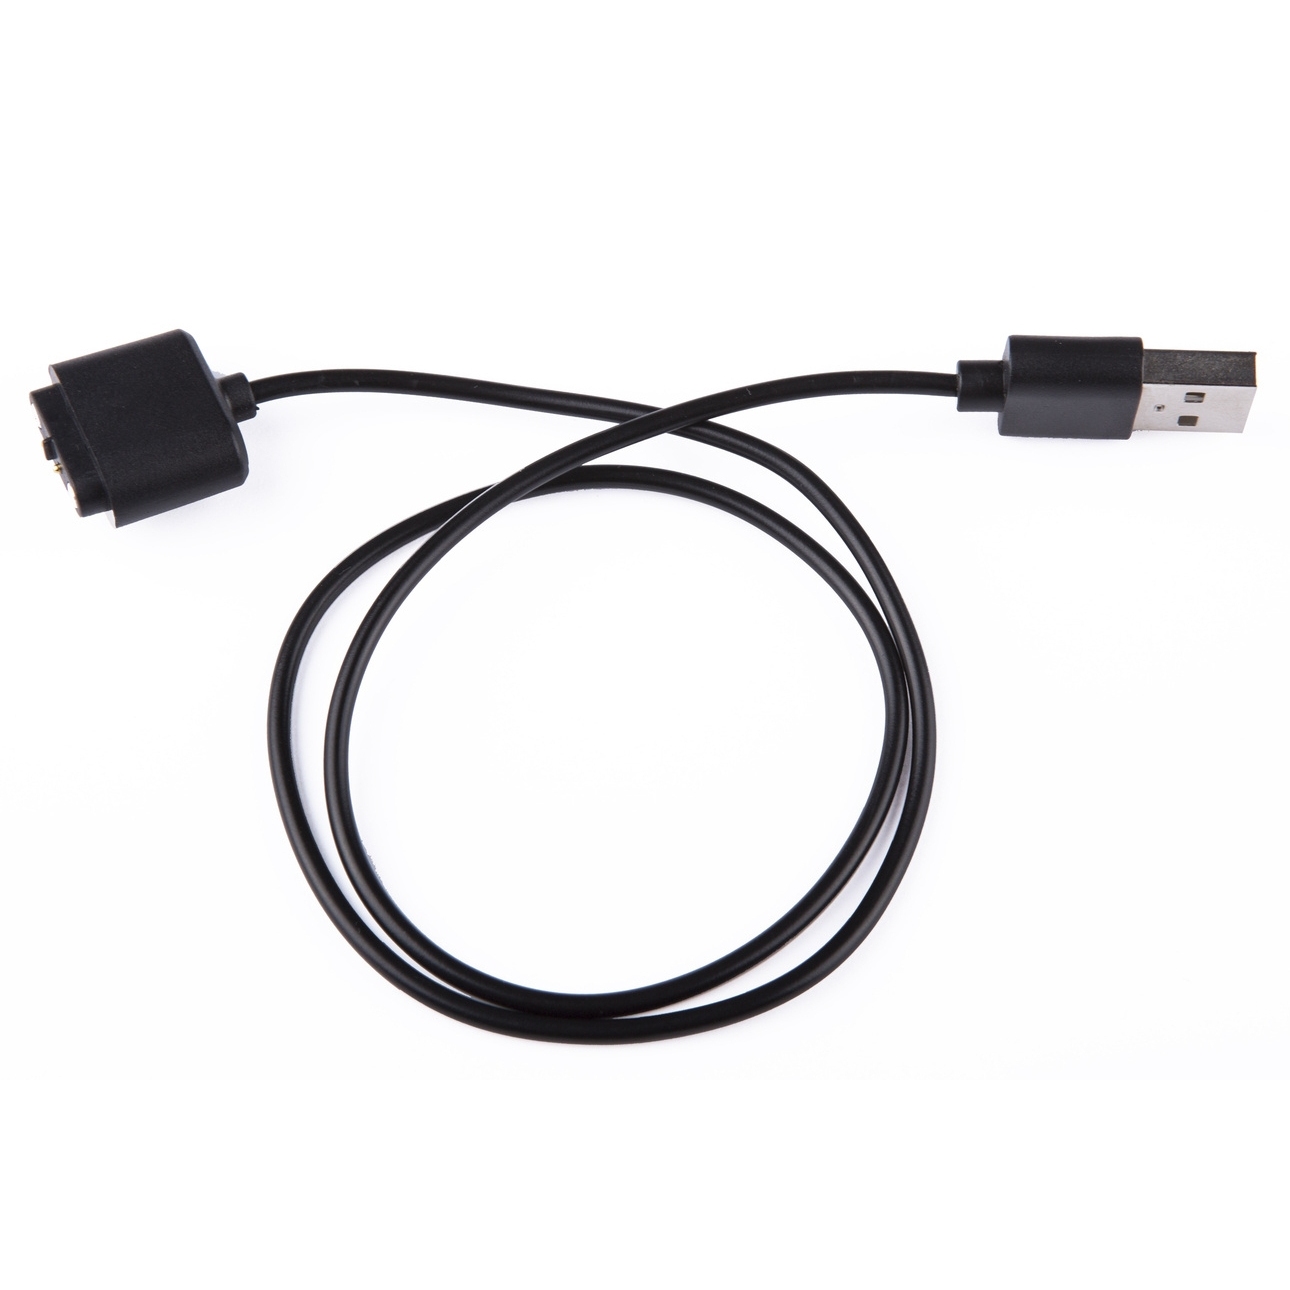 Productfoto van Lumos Magnetic Charging Cable